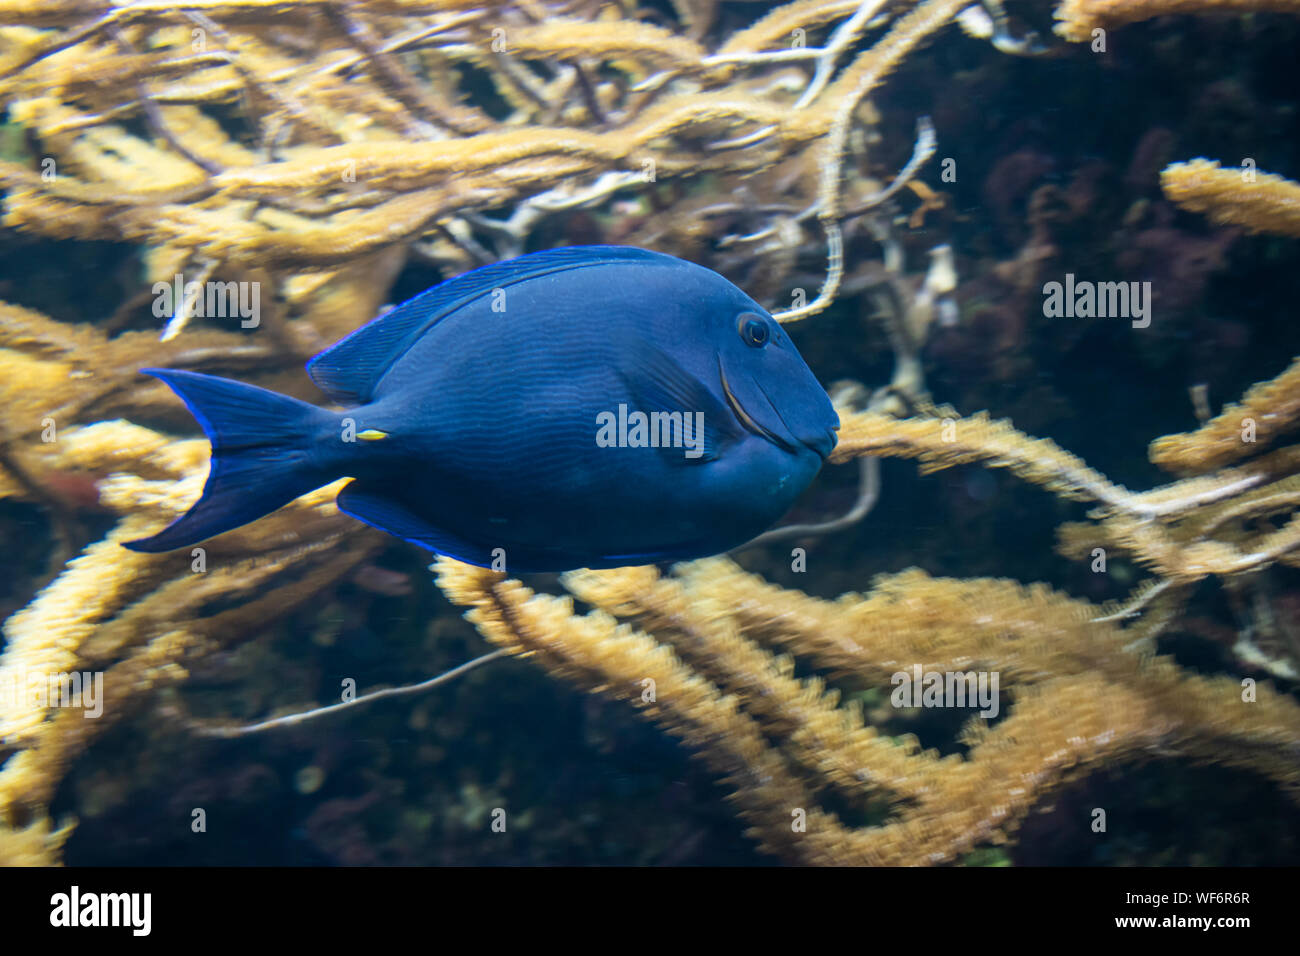 Atlantic blue tang fish (Acanthurus coeruleus). Stock Photo